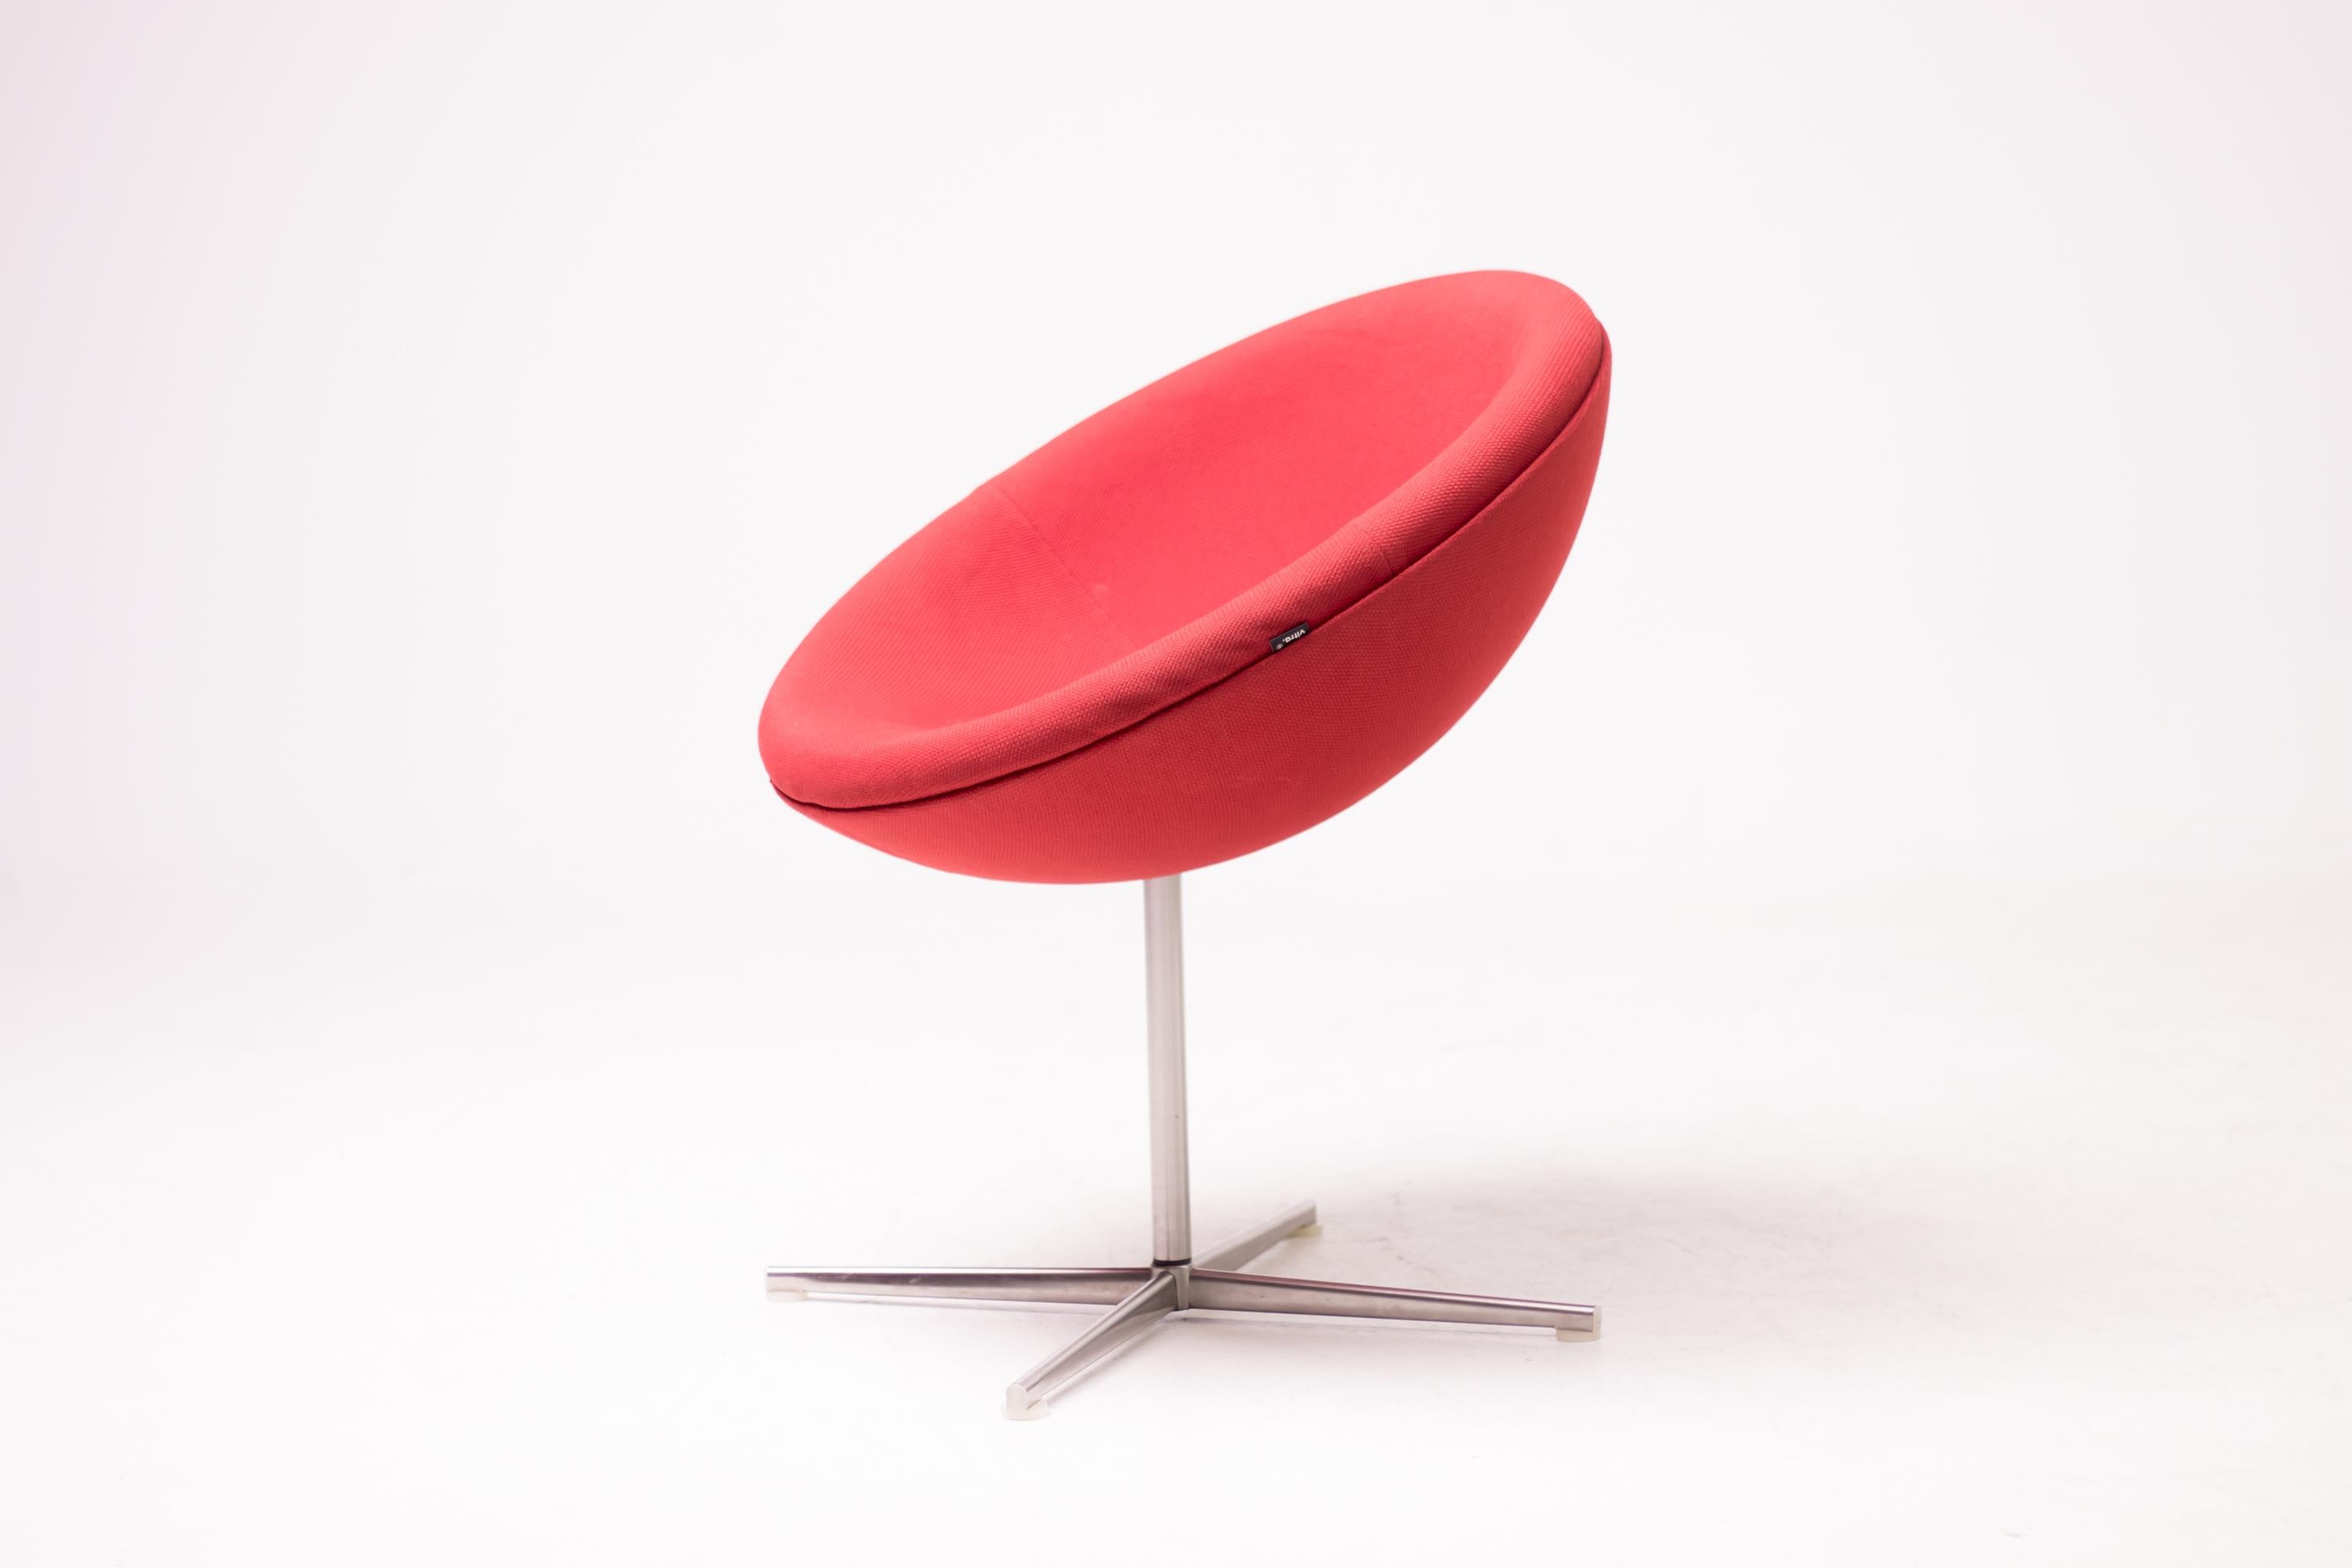 Contemporary Verner Panton C1 Chairs